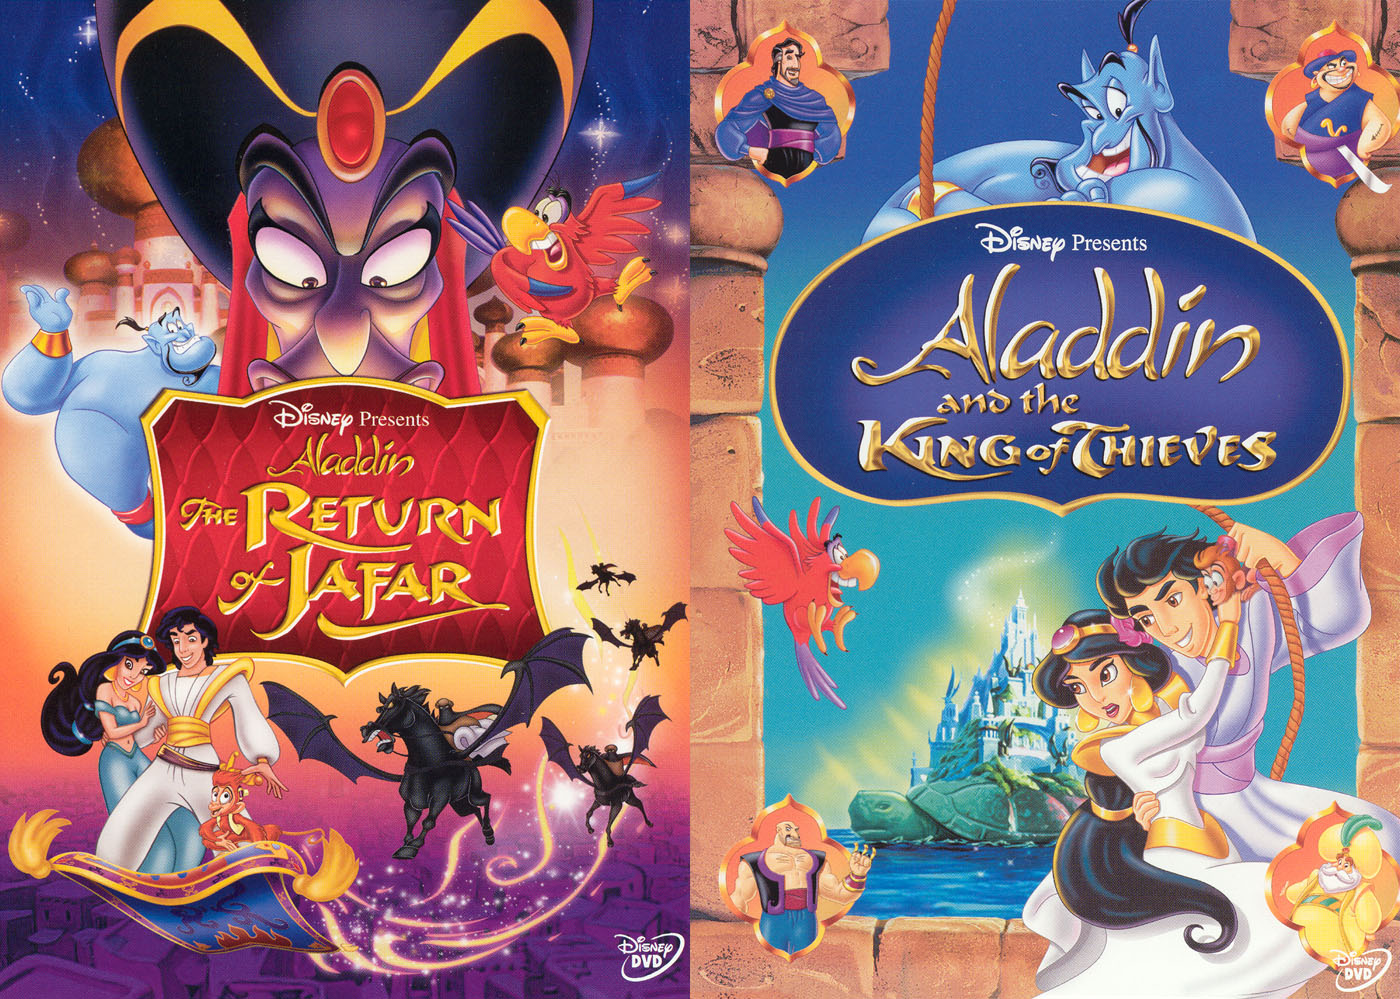 Disney's Aladdin Trilogy DVD Set Includes all 3 Animated Movies – Pristine  Sales